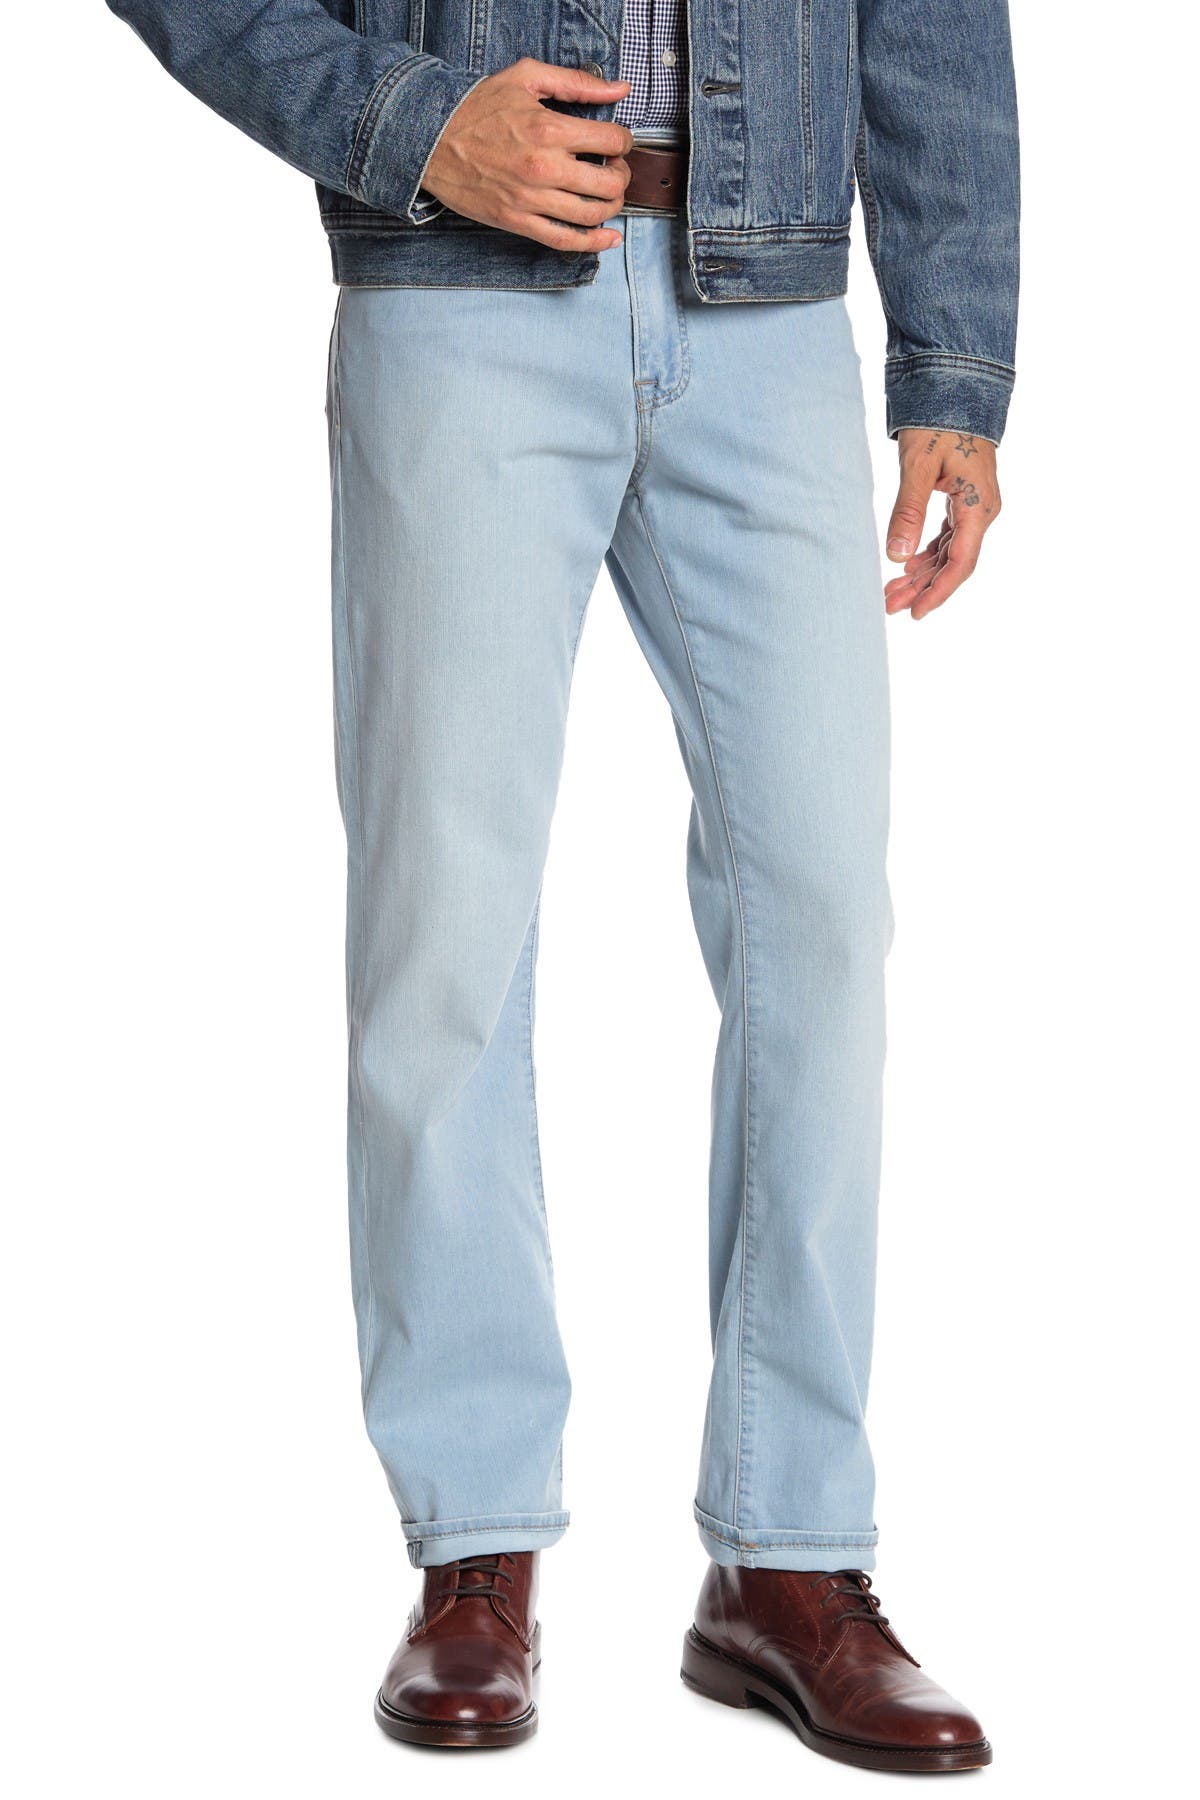 current elliott skinny jeans